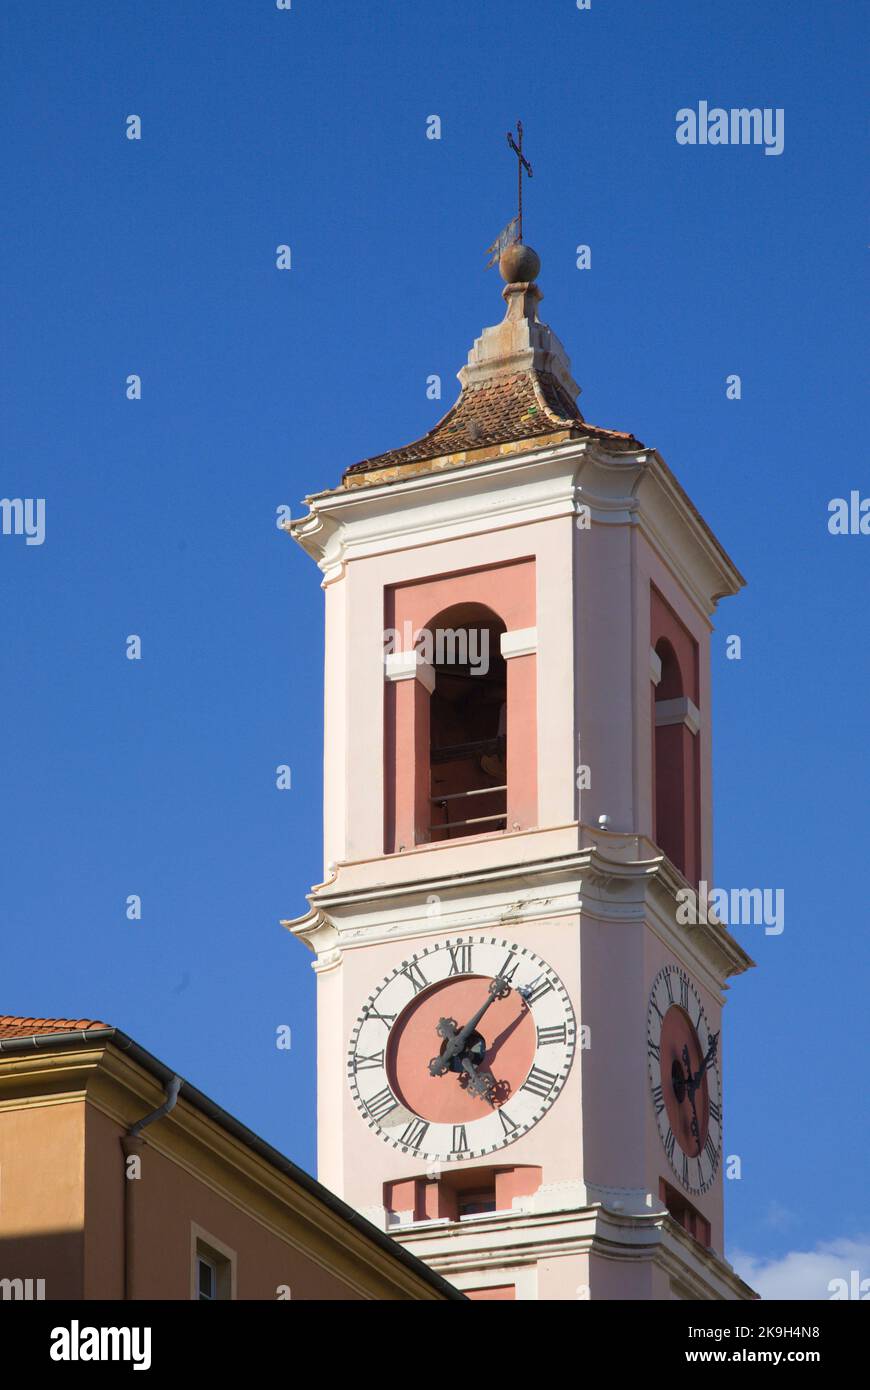 France, Cote d'Azur, Nice, Palais Rusca, clock tower, Stock Photo